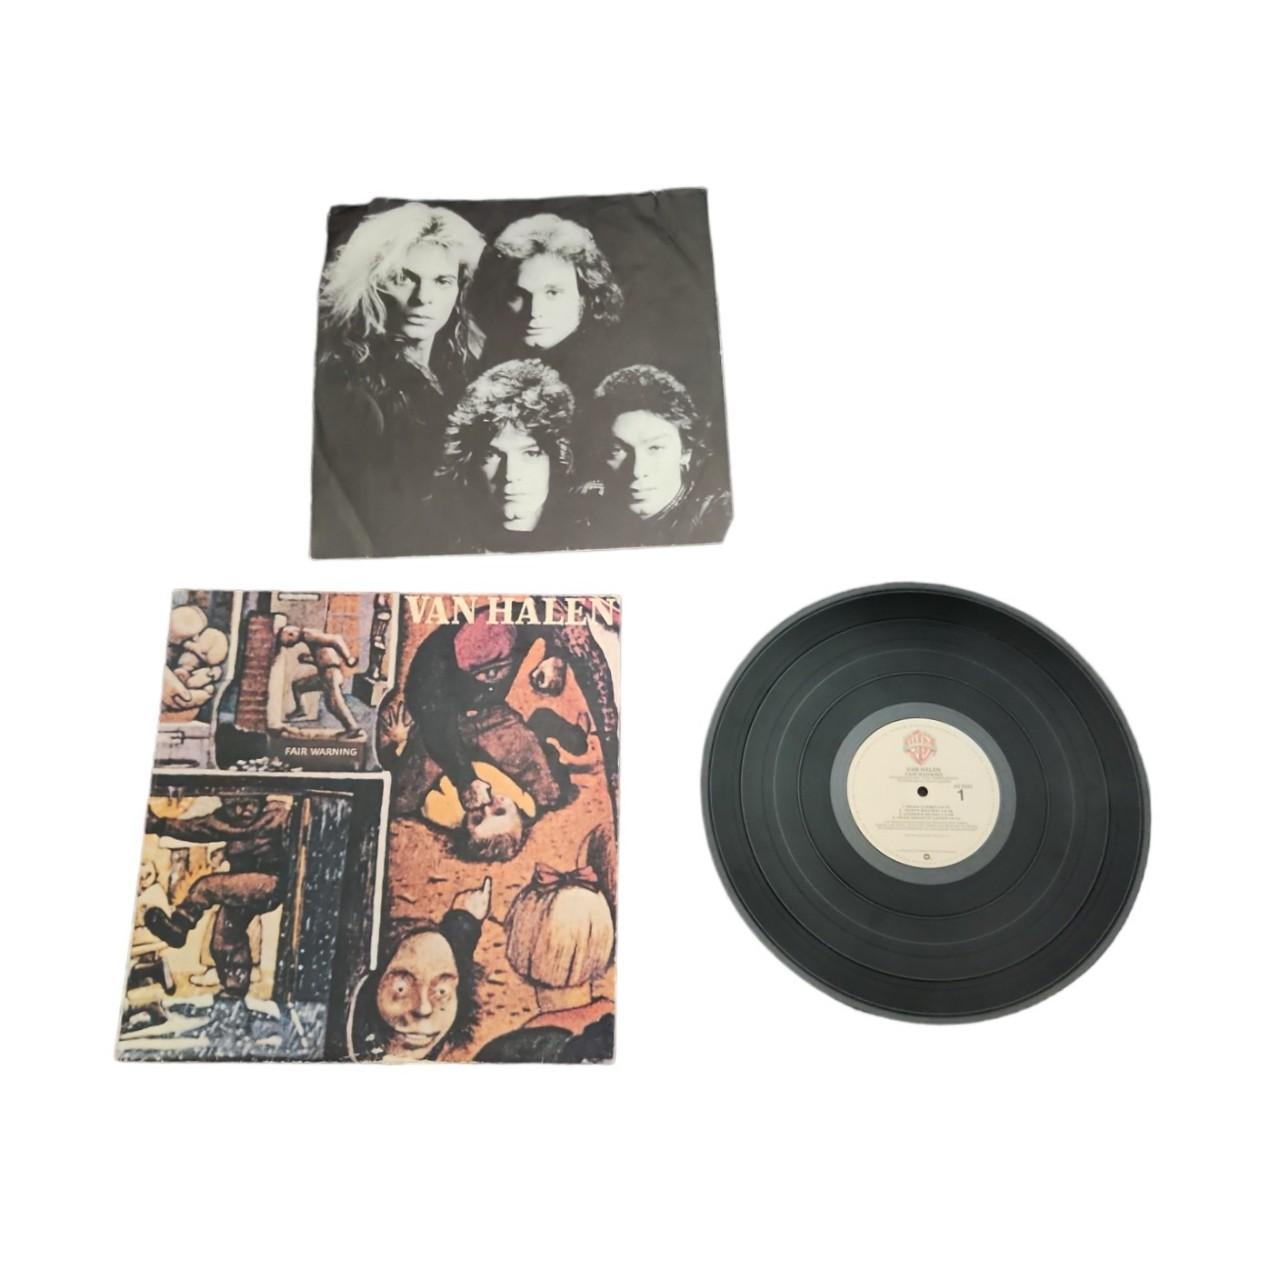 Van Halen - Fair Warning (Vinyl Record LP) 1981 First Pressing With In —